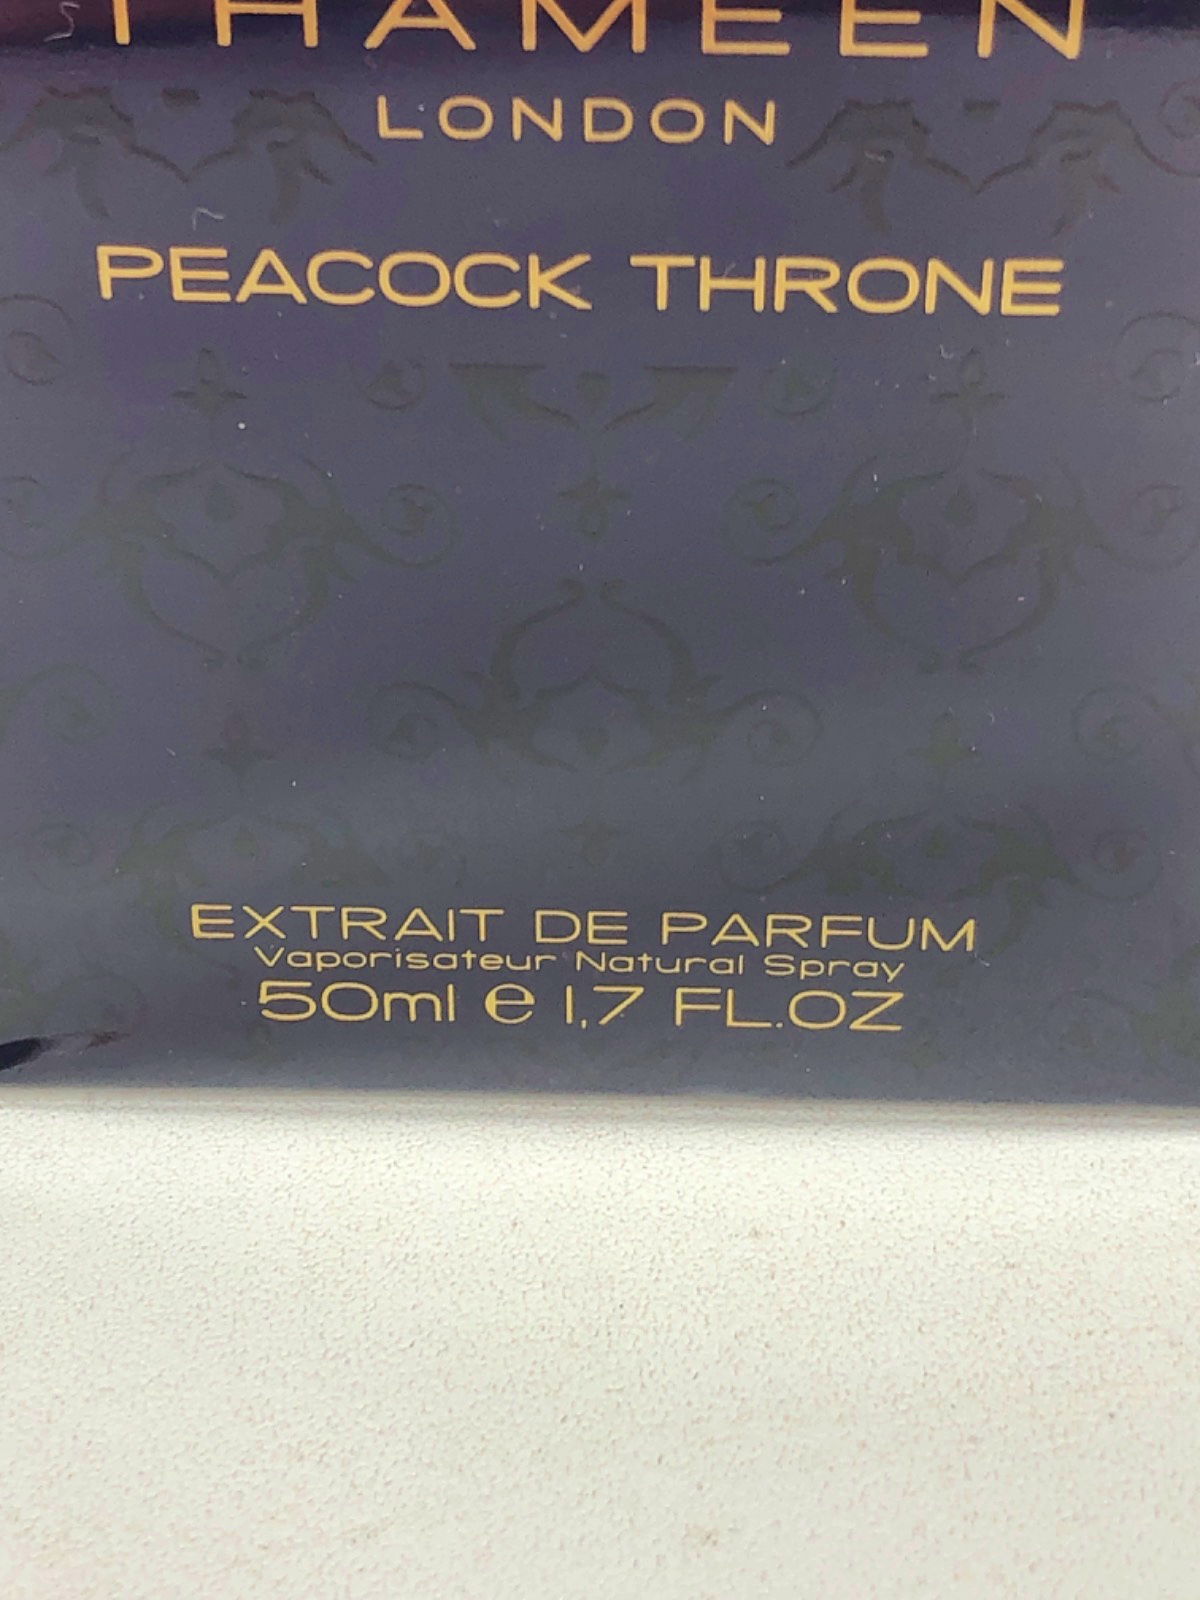 Thameen London Peacock Throne Extrait de Parfum 50ml